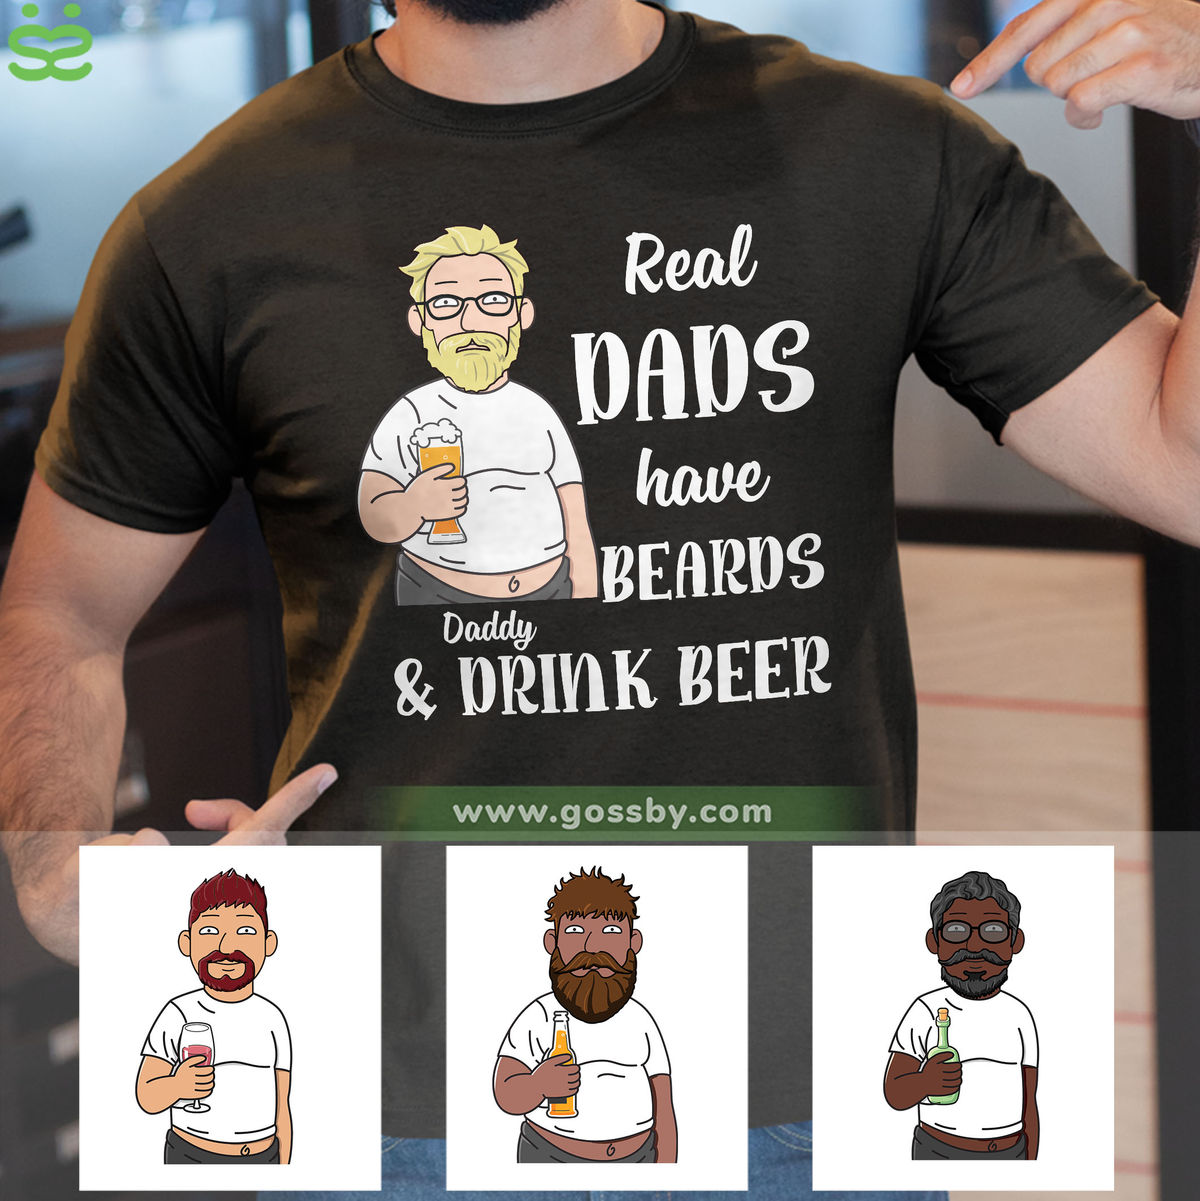 Drink Louisville Beer T-Shirt